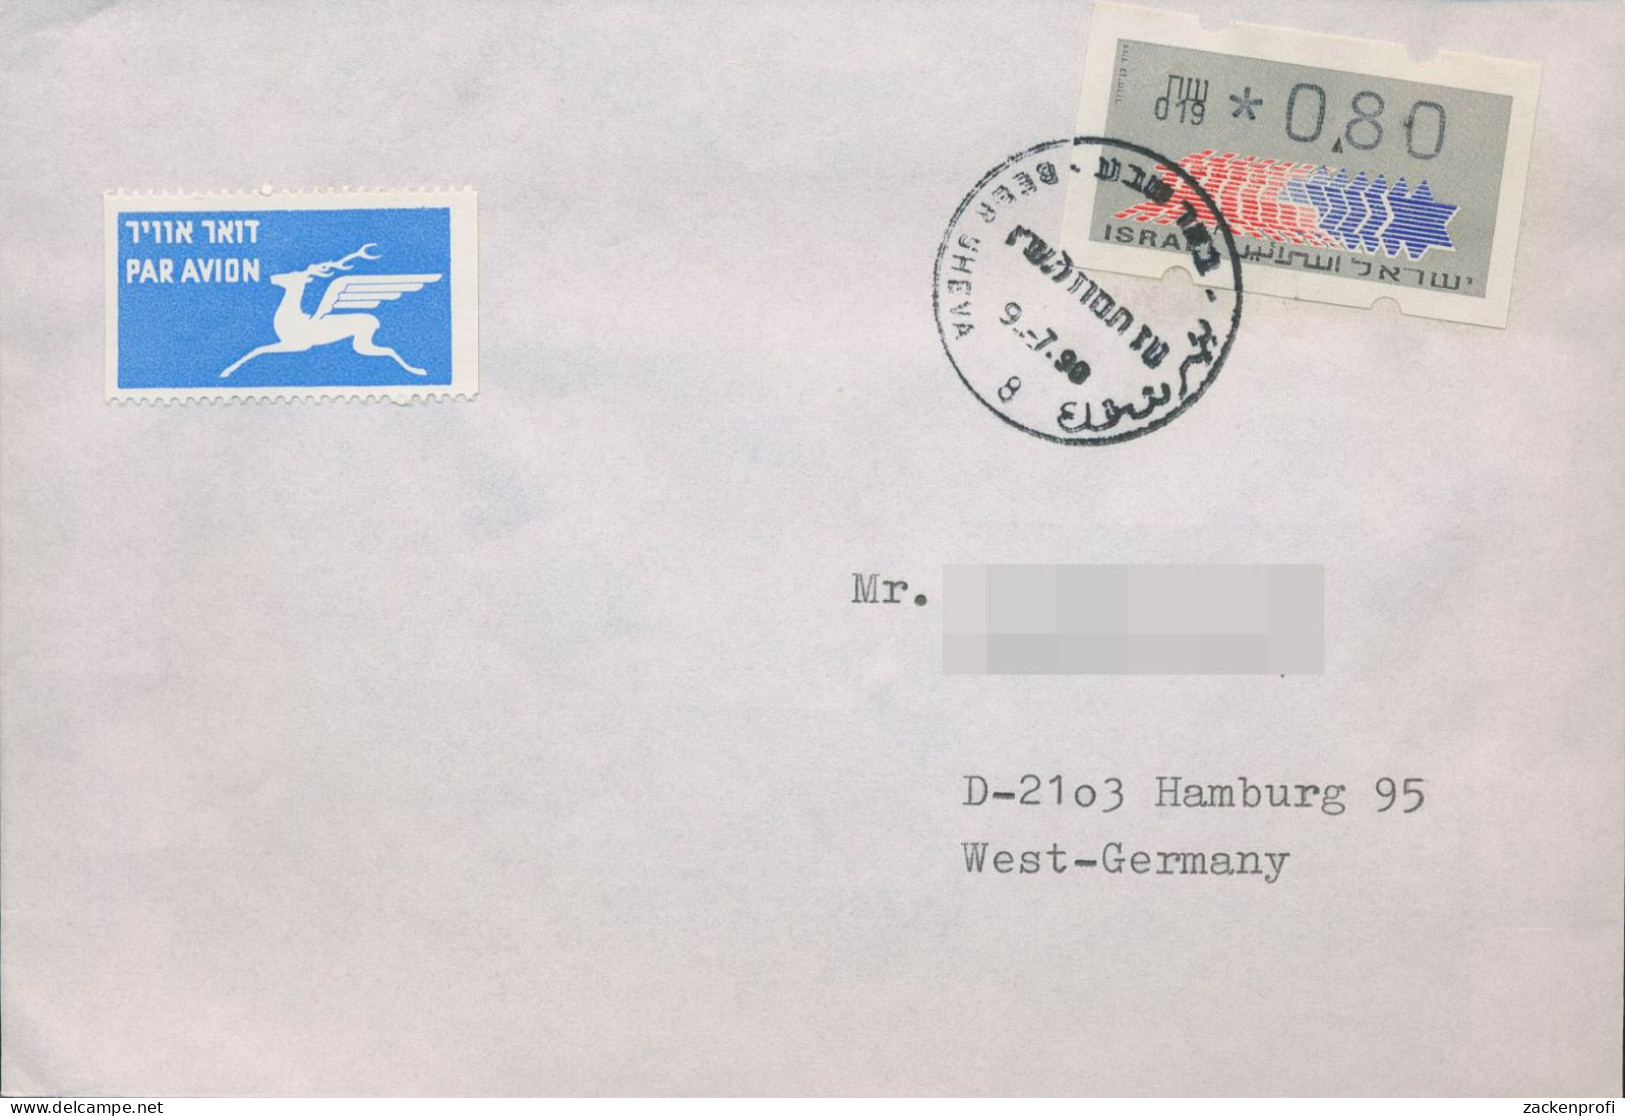 Israel ATM 1990 Hirsch Automat 019 Ersttagsbrief, ATM 3.1.19 FDC (X80407) - Franking Labels